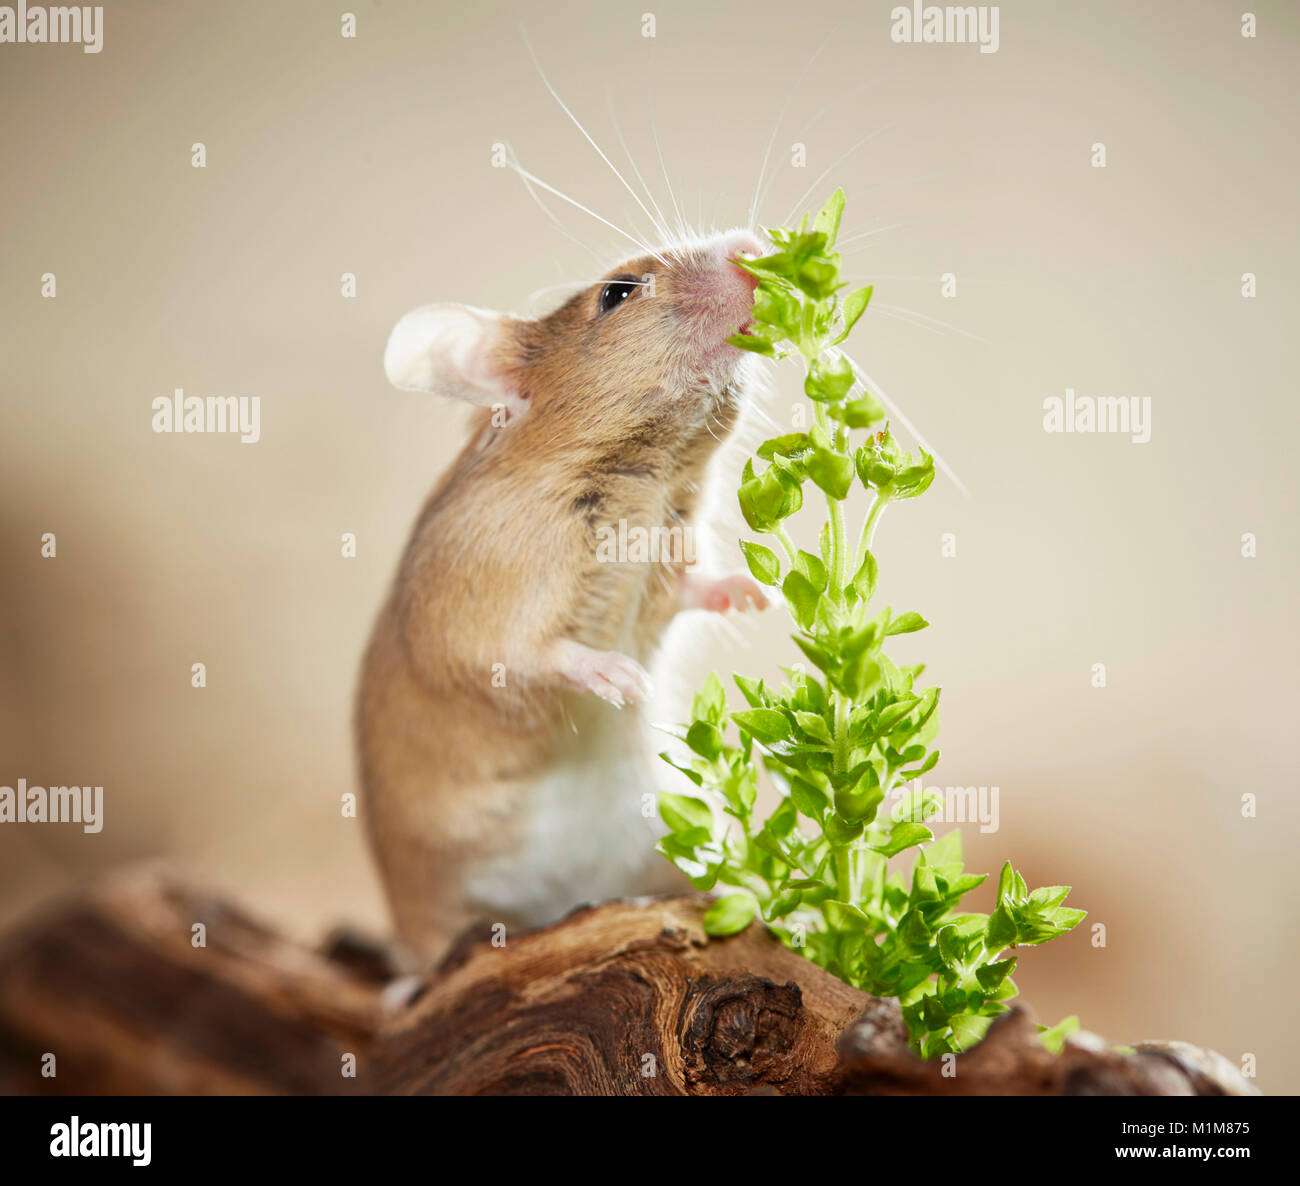 Mouse fantasia di mangiare le foglie di basilico. Germania Foto Stock